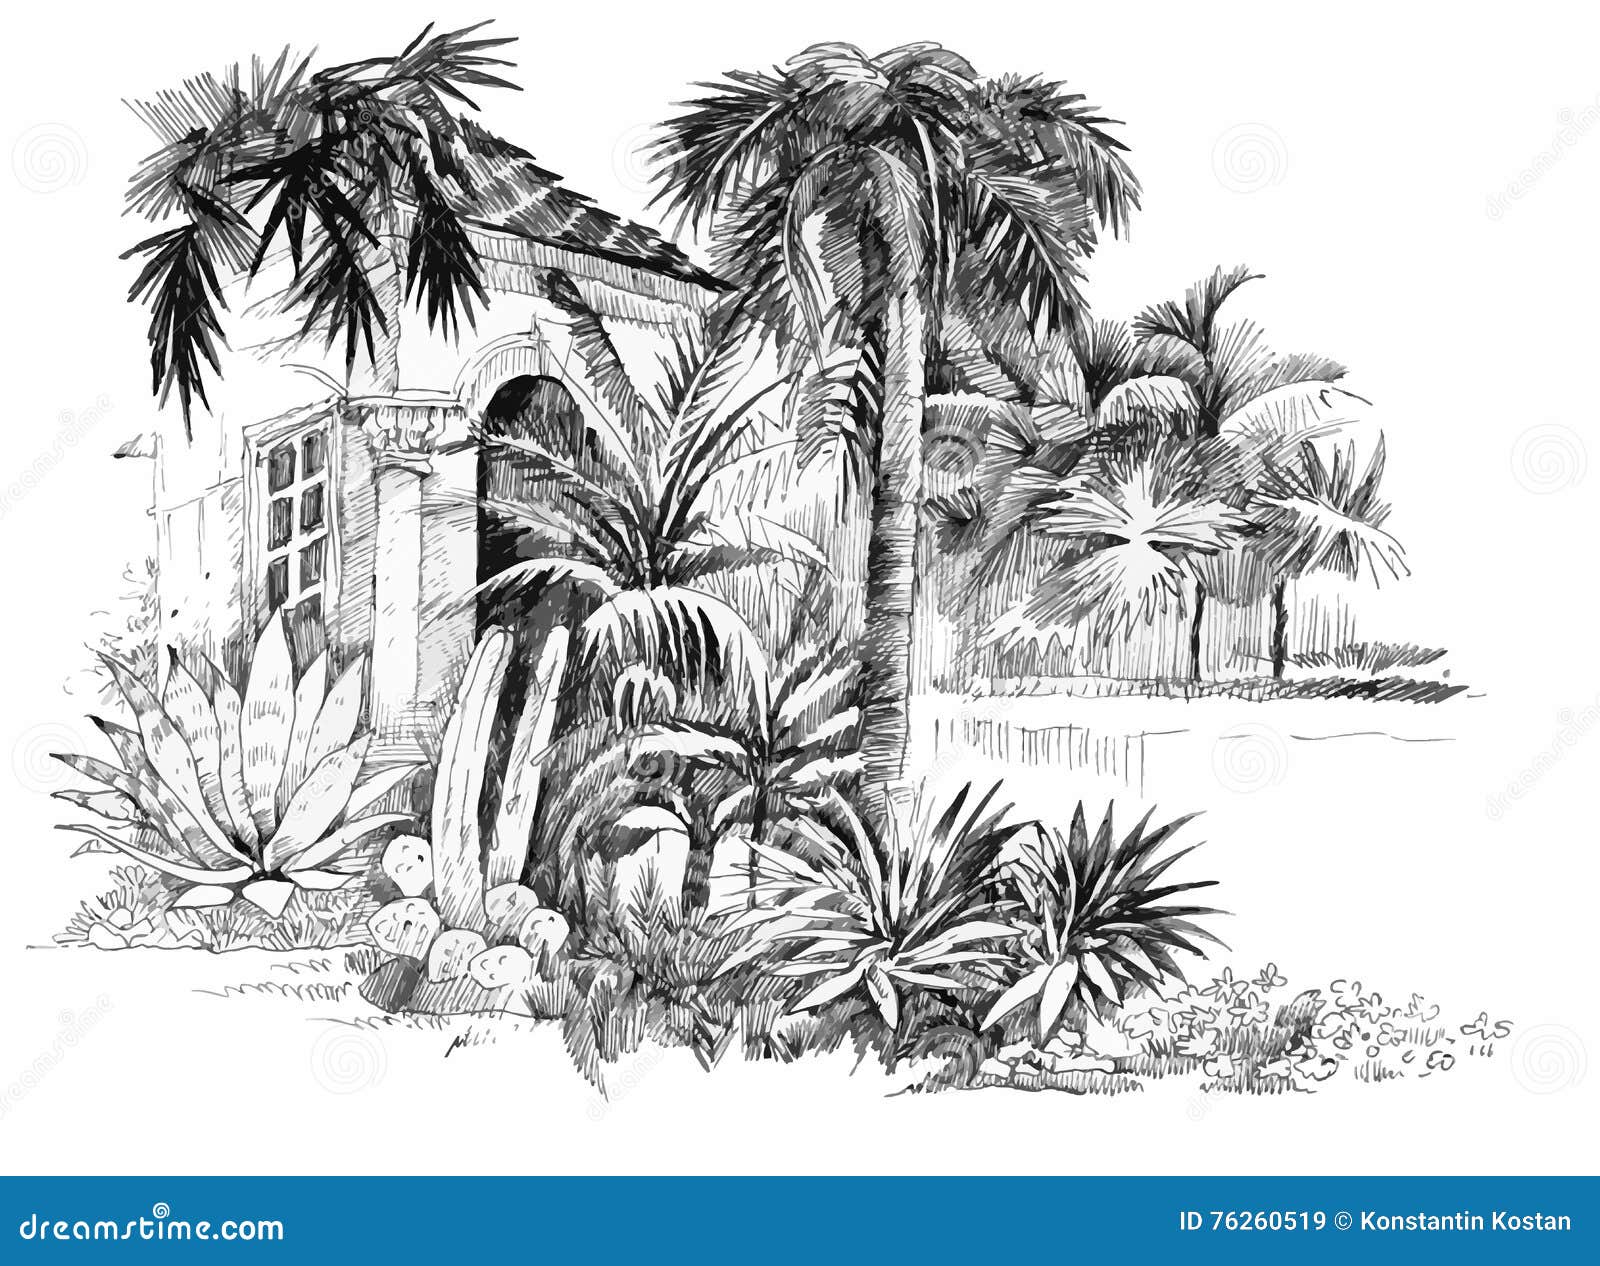 Tropical Sketch Images  Free Download on Freepik